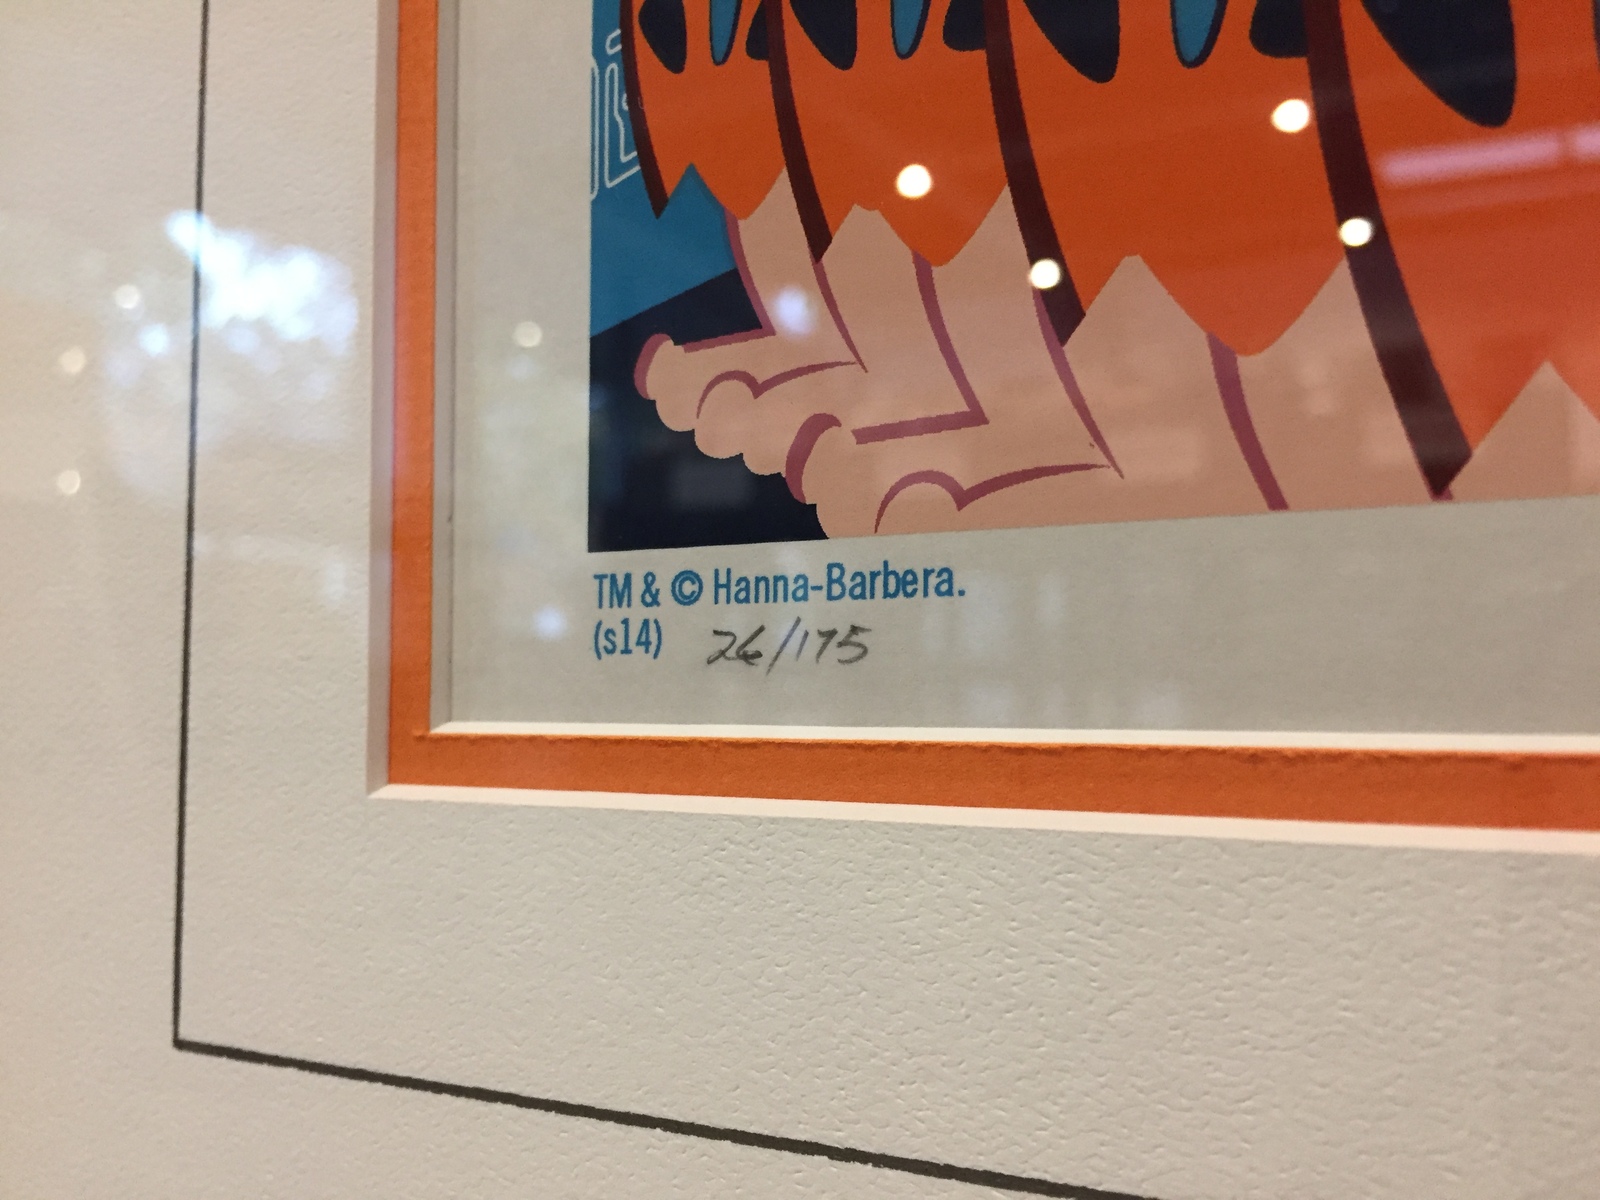 Ten Little Flintstones by Dave Perillo Mondo Screen Print FRAMED